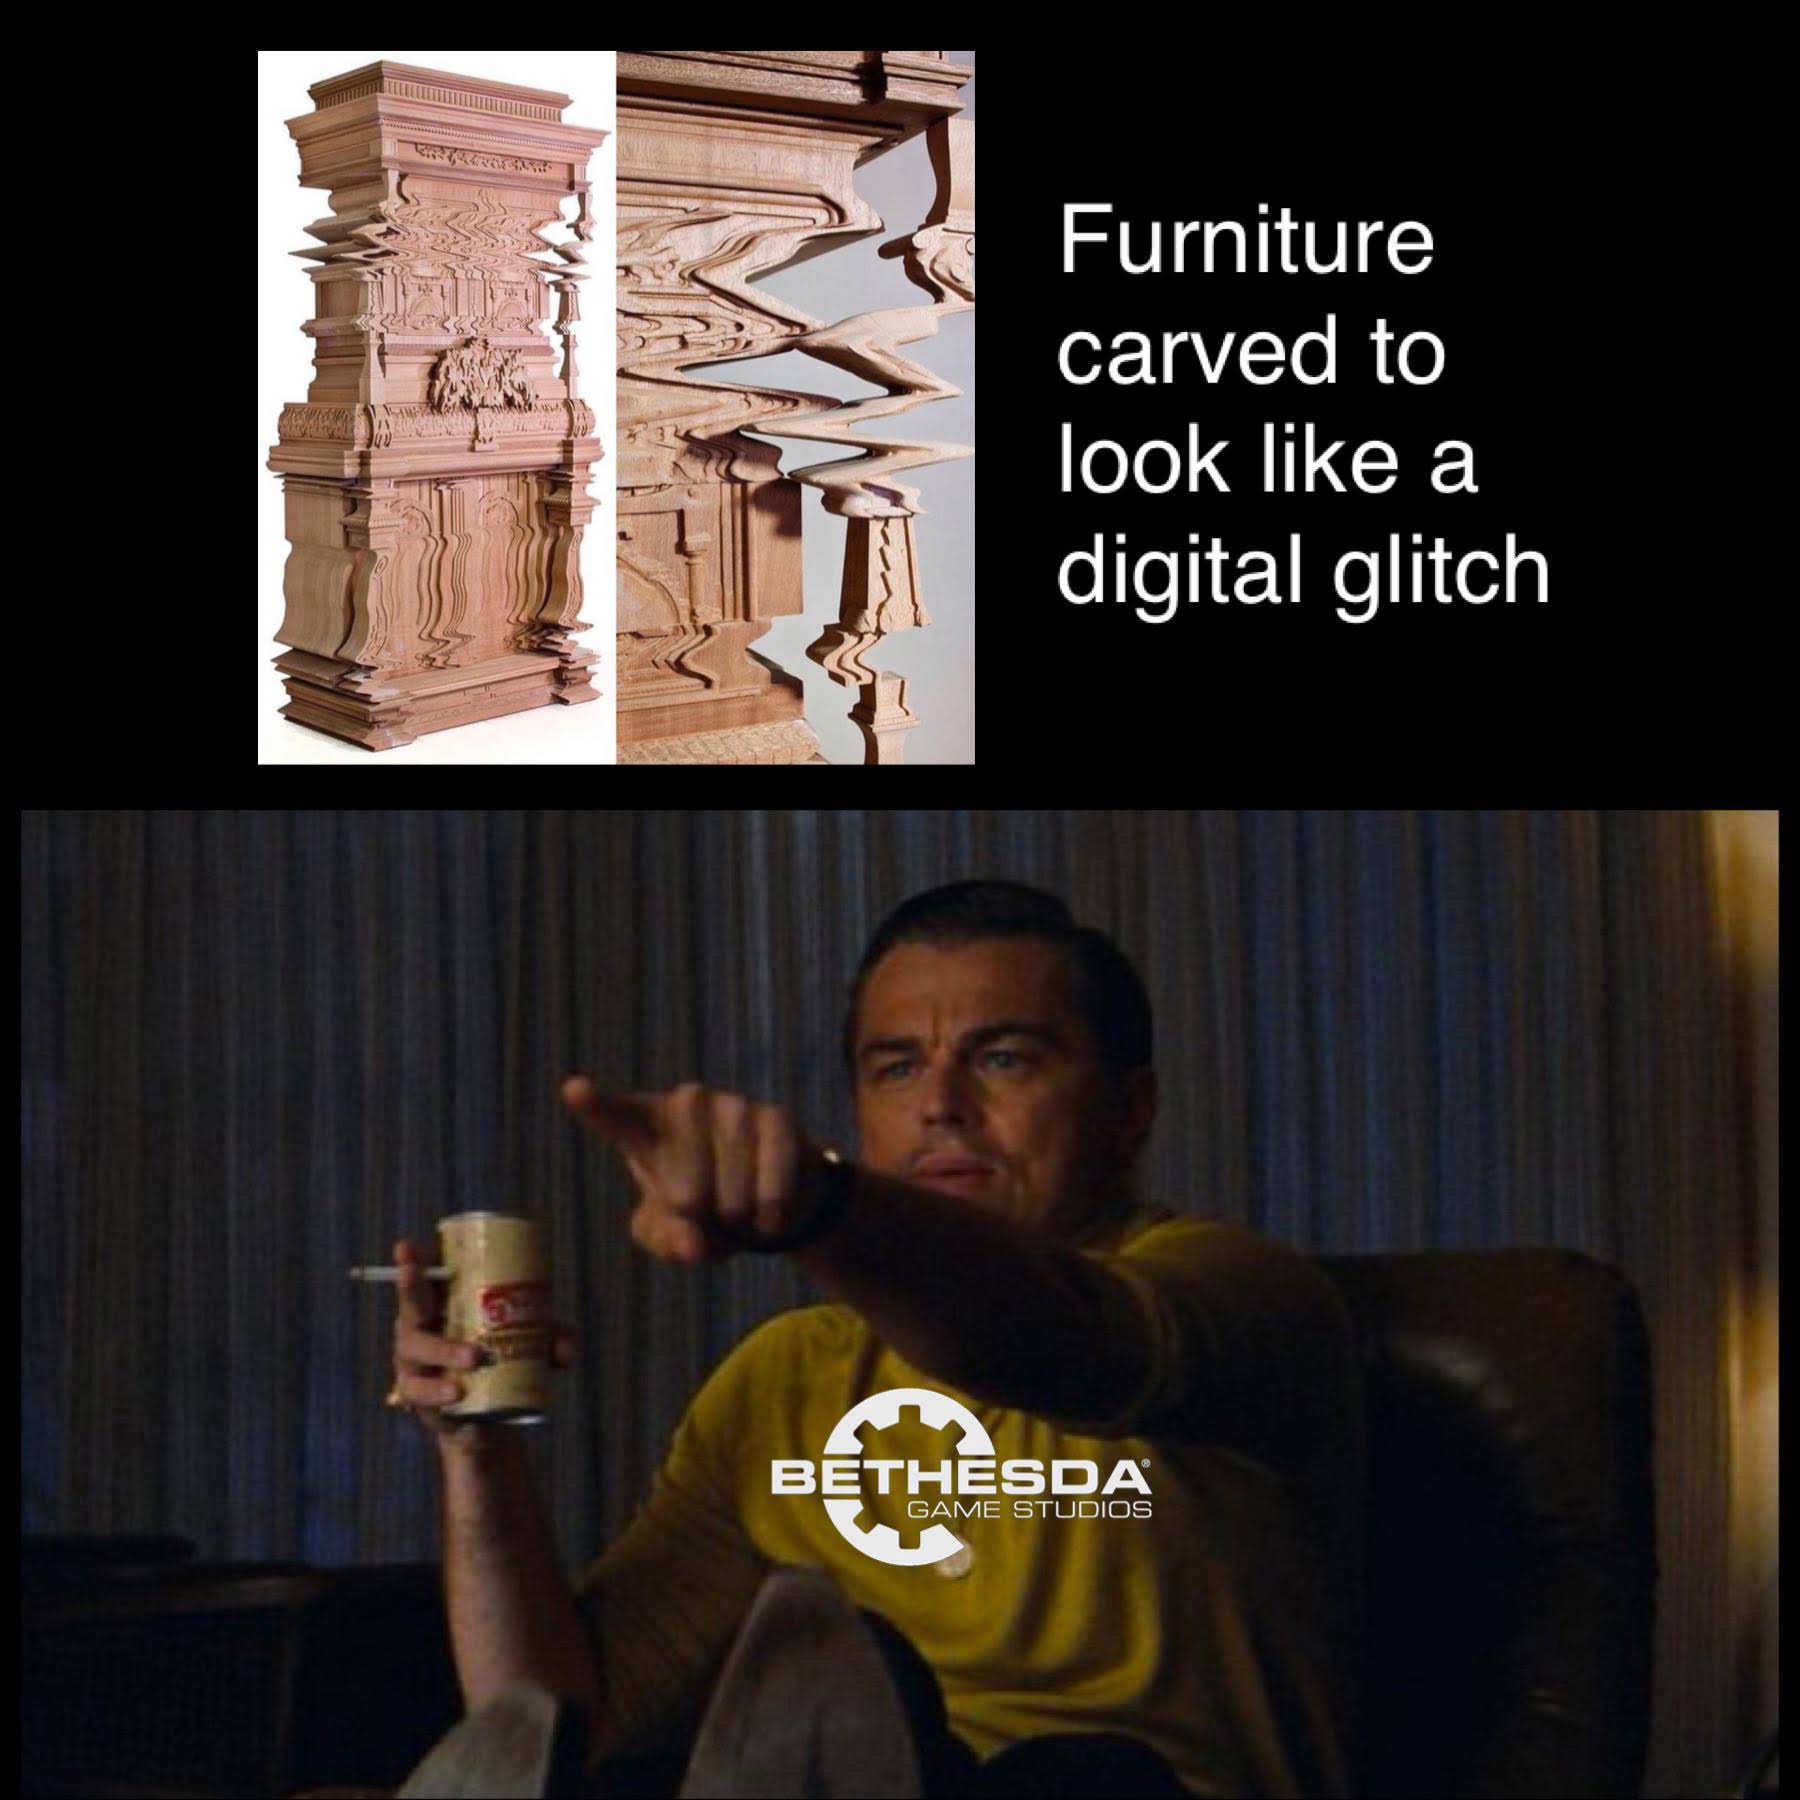 sex meme - Furniture carved to look a digital glitch Bethesda Game Studios